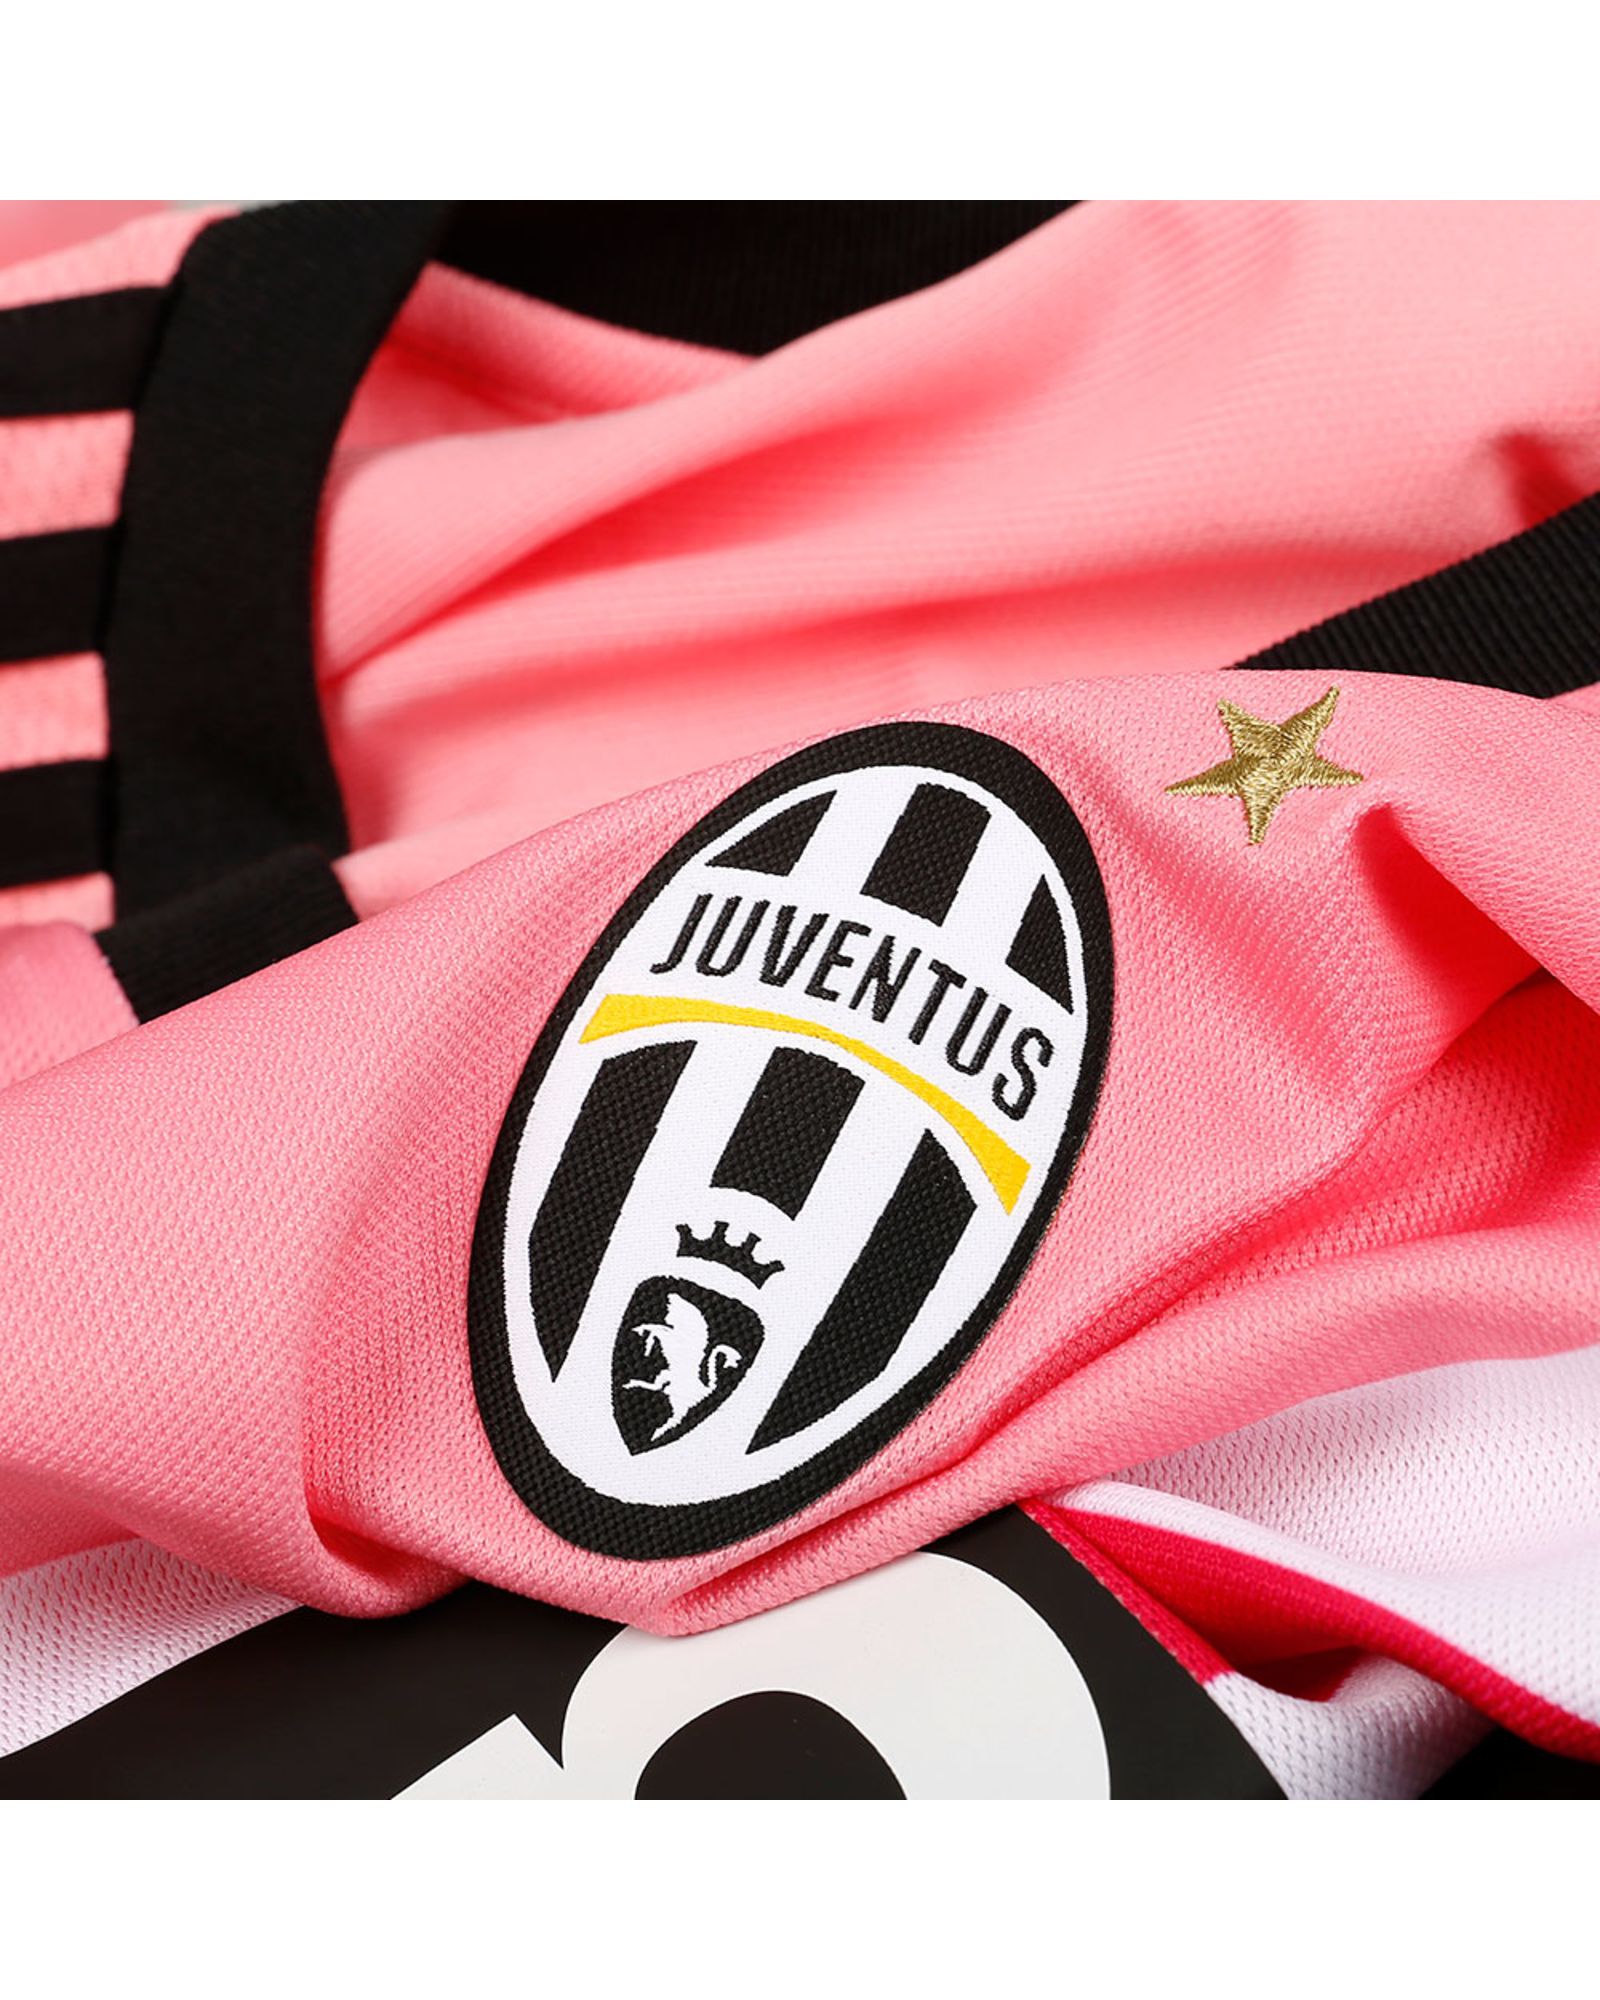 Camiseta 2ª Juventus 2015/2016 Rosa  - Fútbol Factory